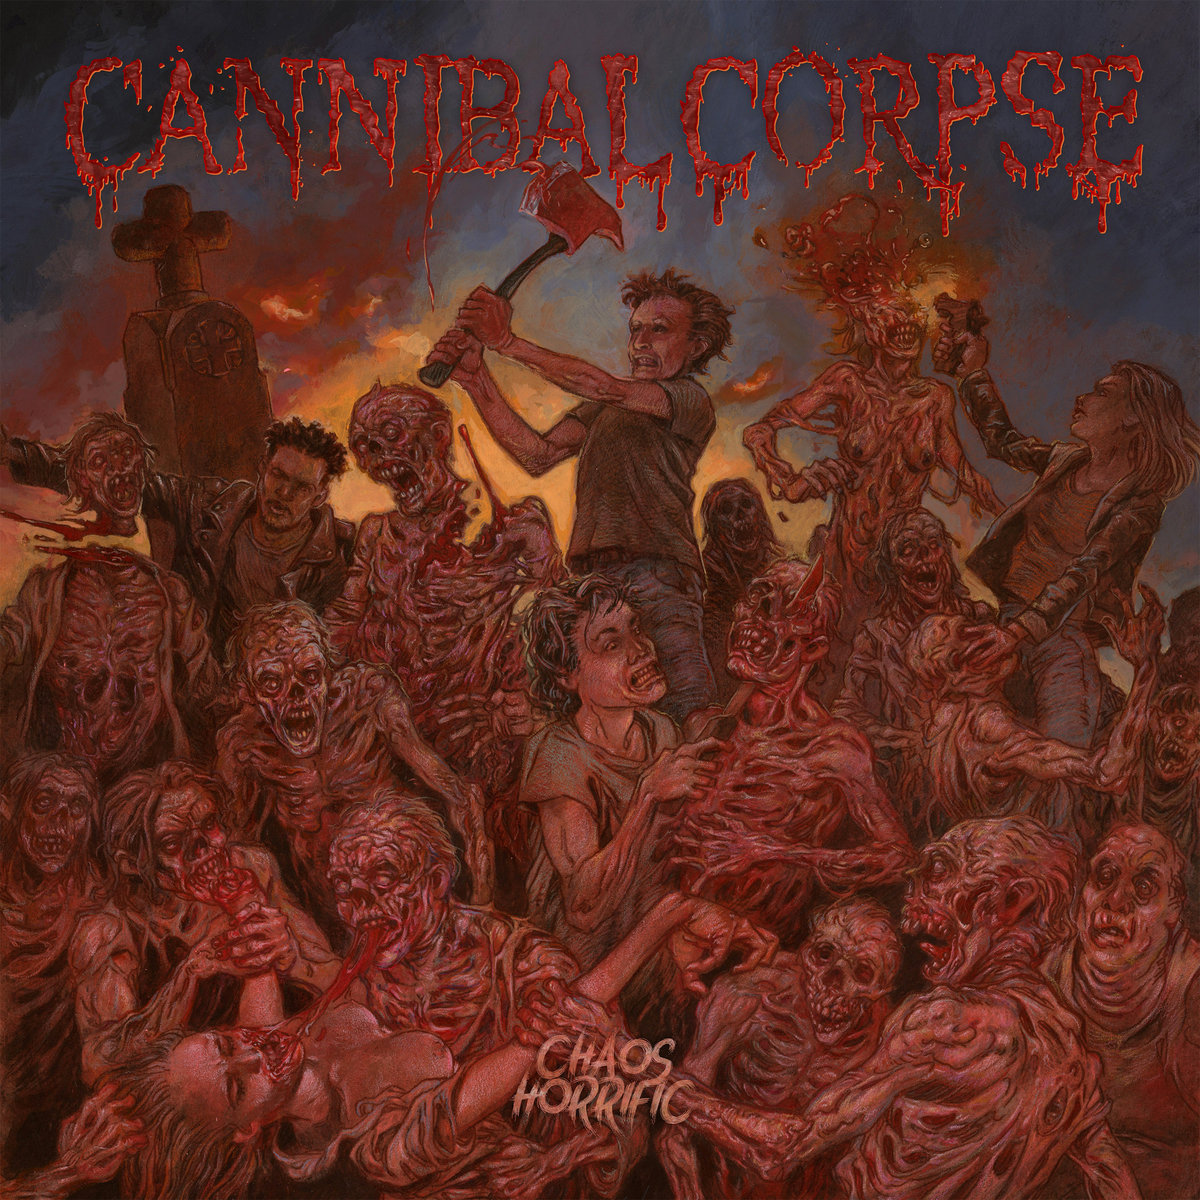 Cannibal Corpse - Chaos Horrific (Burned flesh) Gatefold - LP